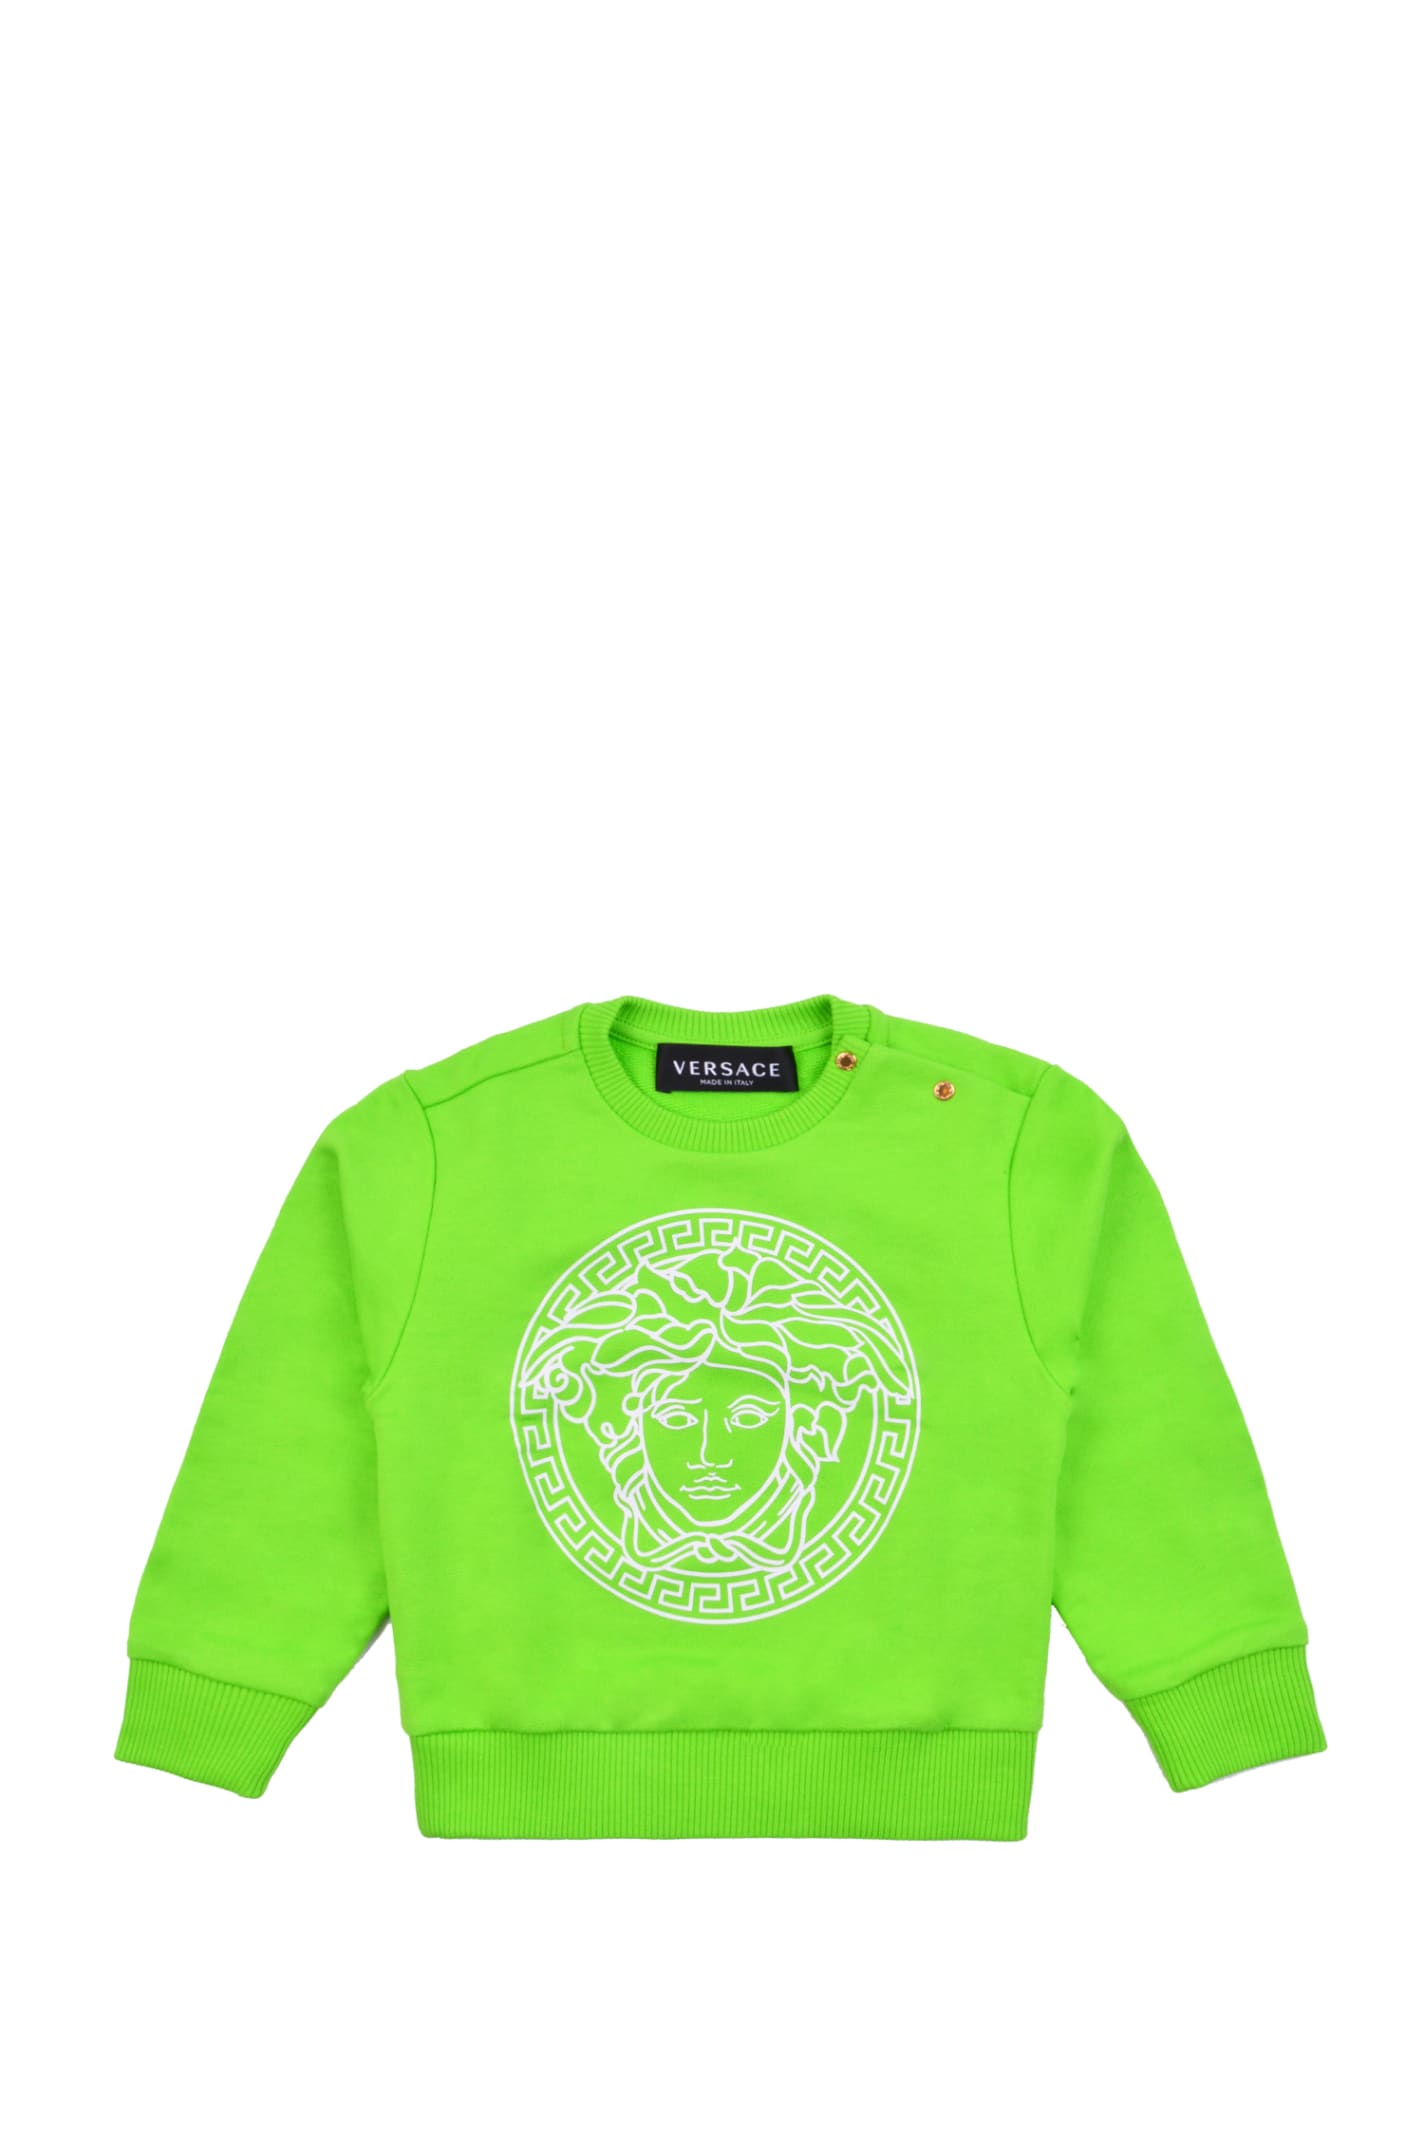 Versace Sweatshirt With Cotton Print